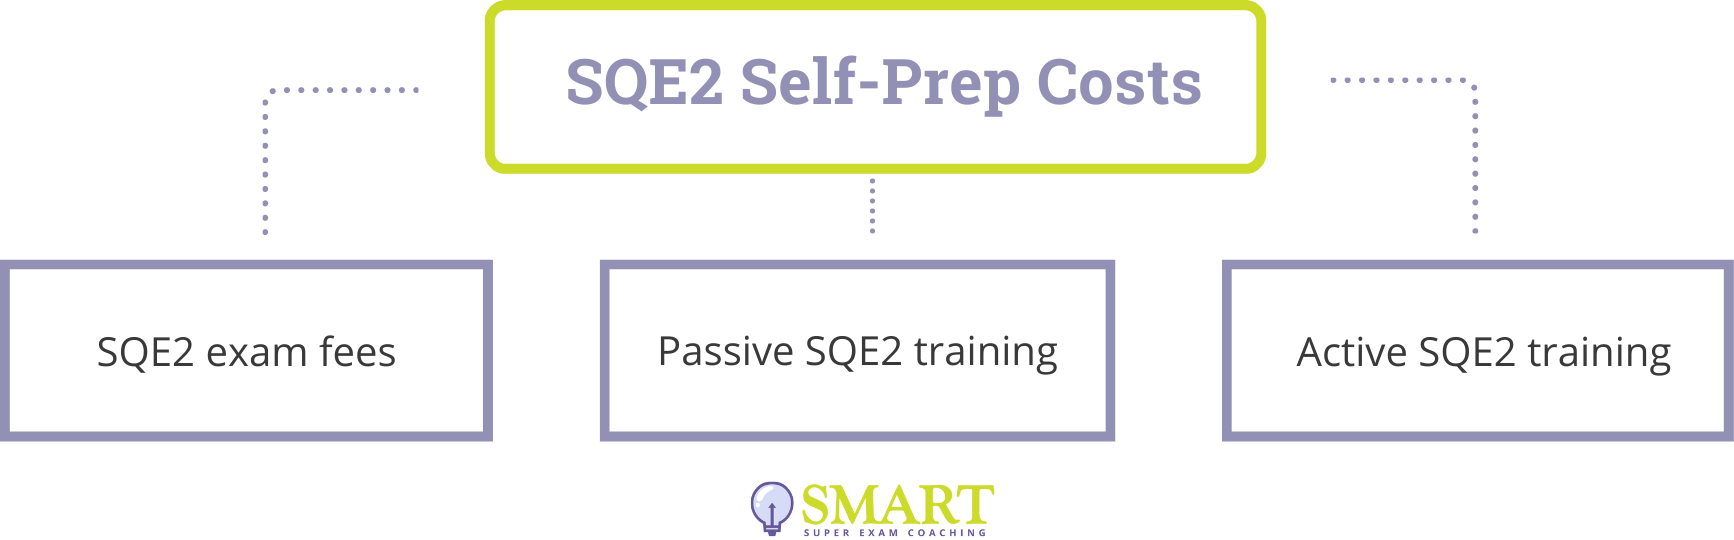 SQE2 Self-Preparation Costs